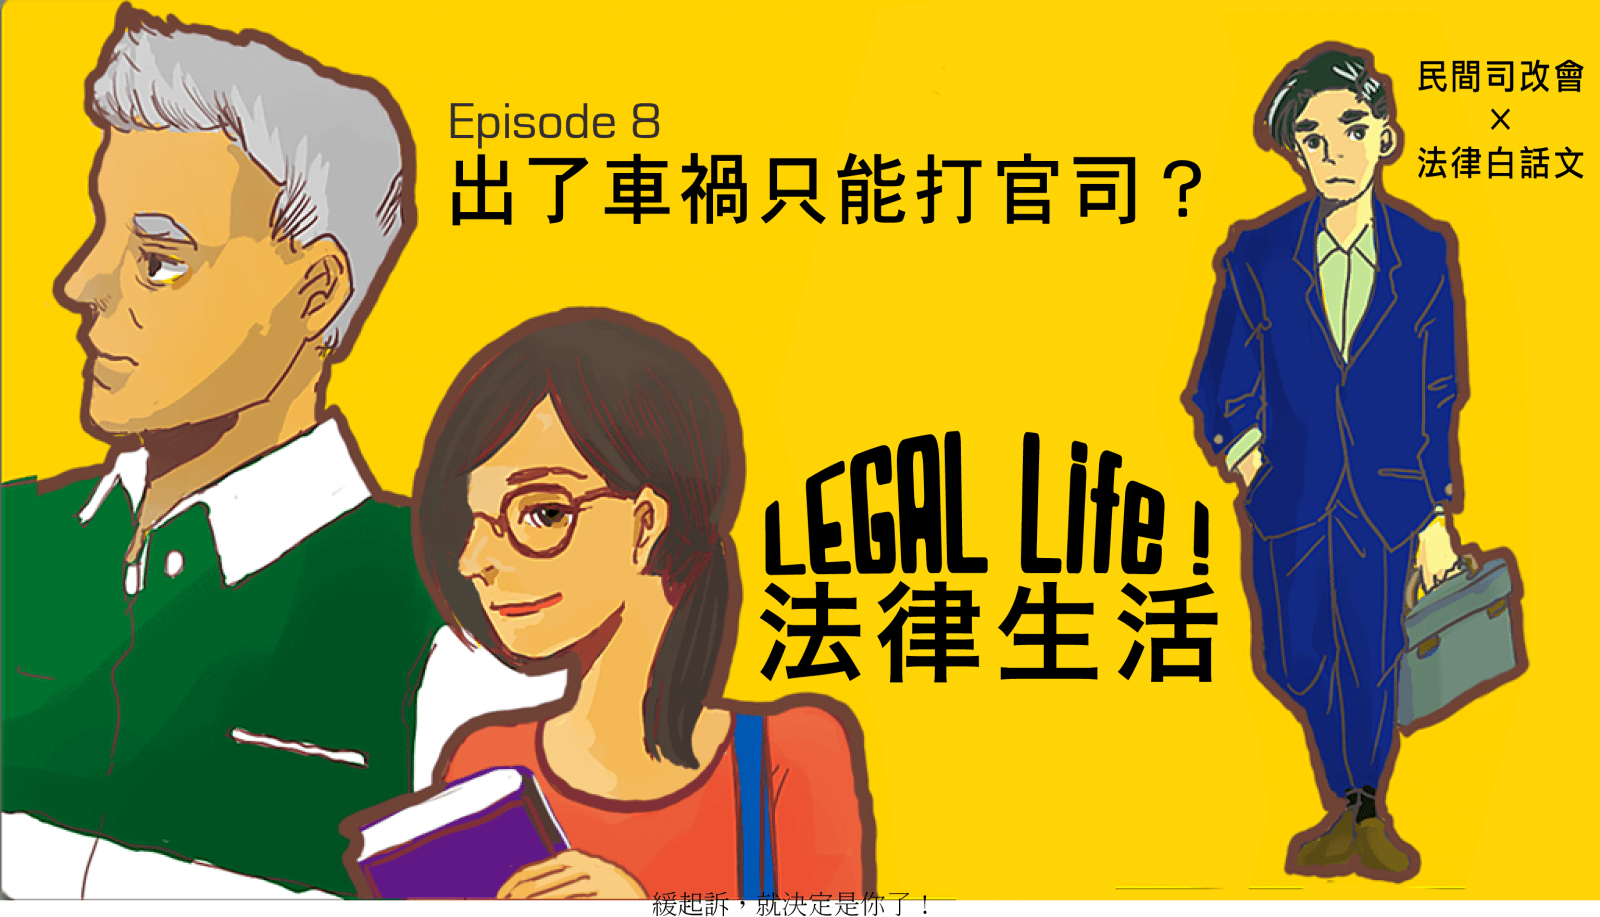 2016/07/legal-life8.png